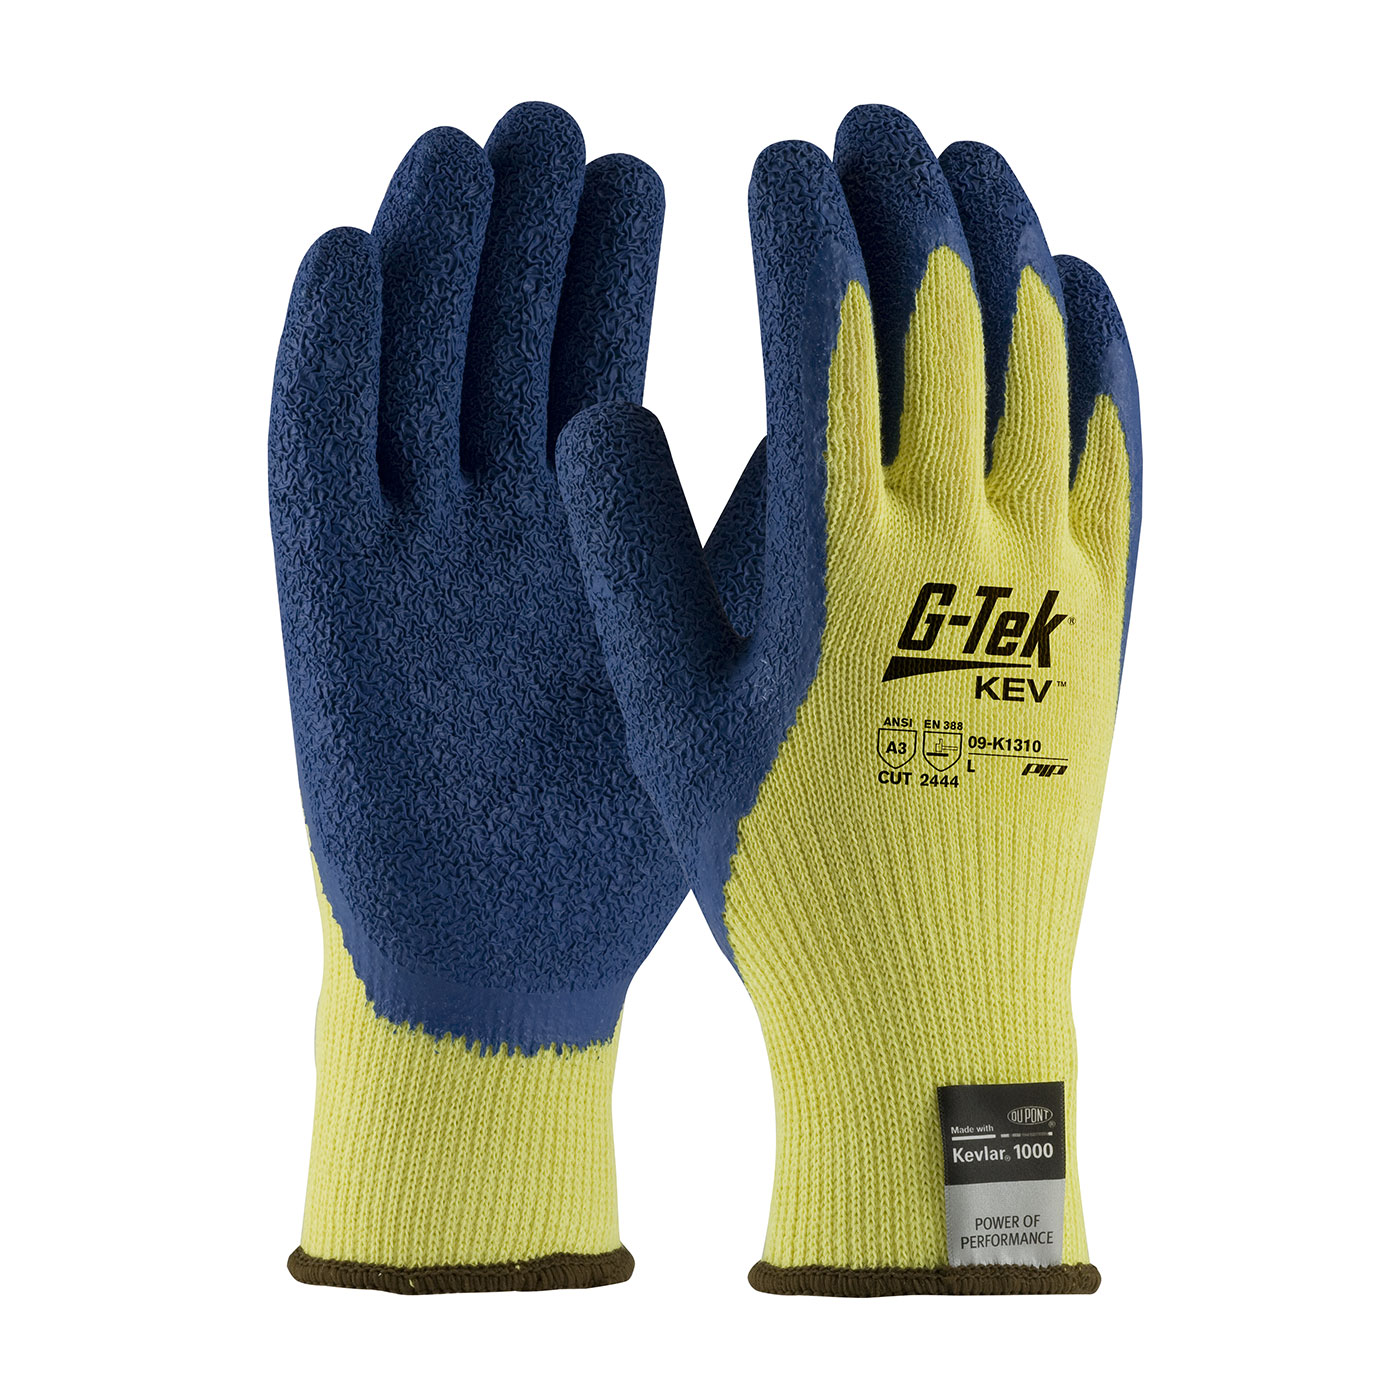 #09-K1310 PIP G-Tek®KEV™Kevlar®乳胶涂层抗切割防护工作手套，带褶皱涂层。切到第三层。